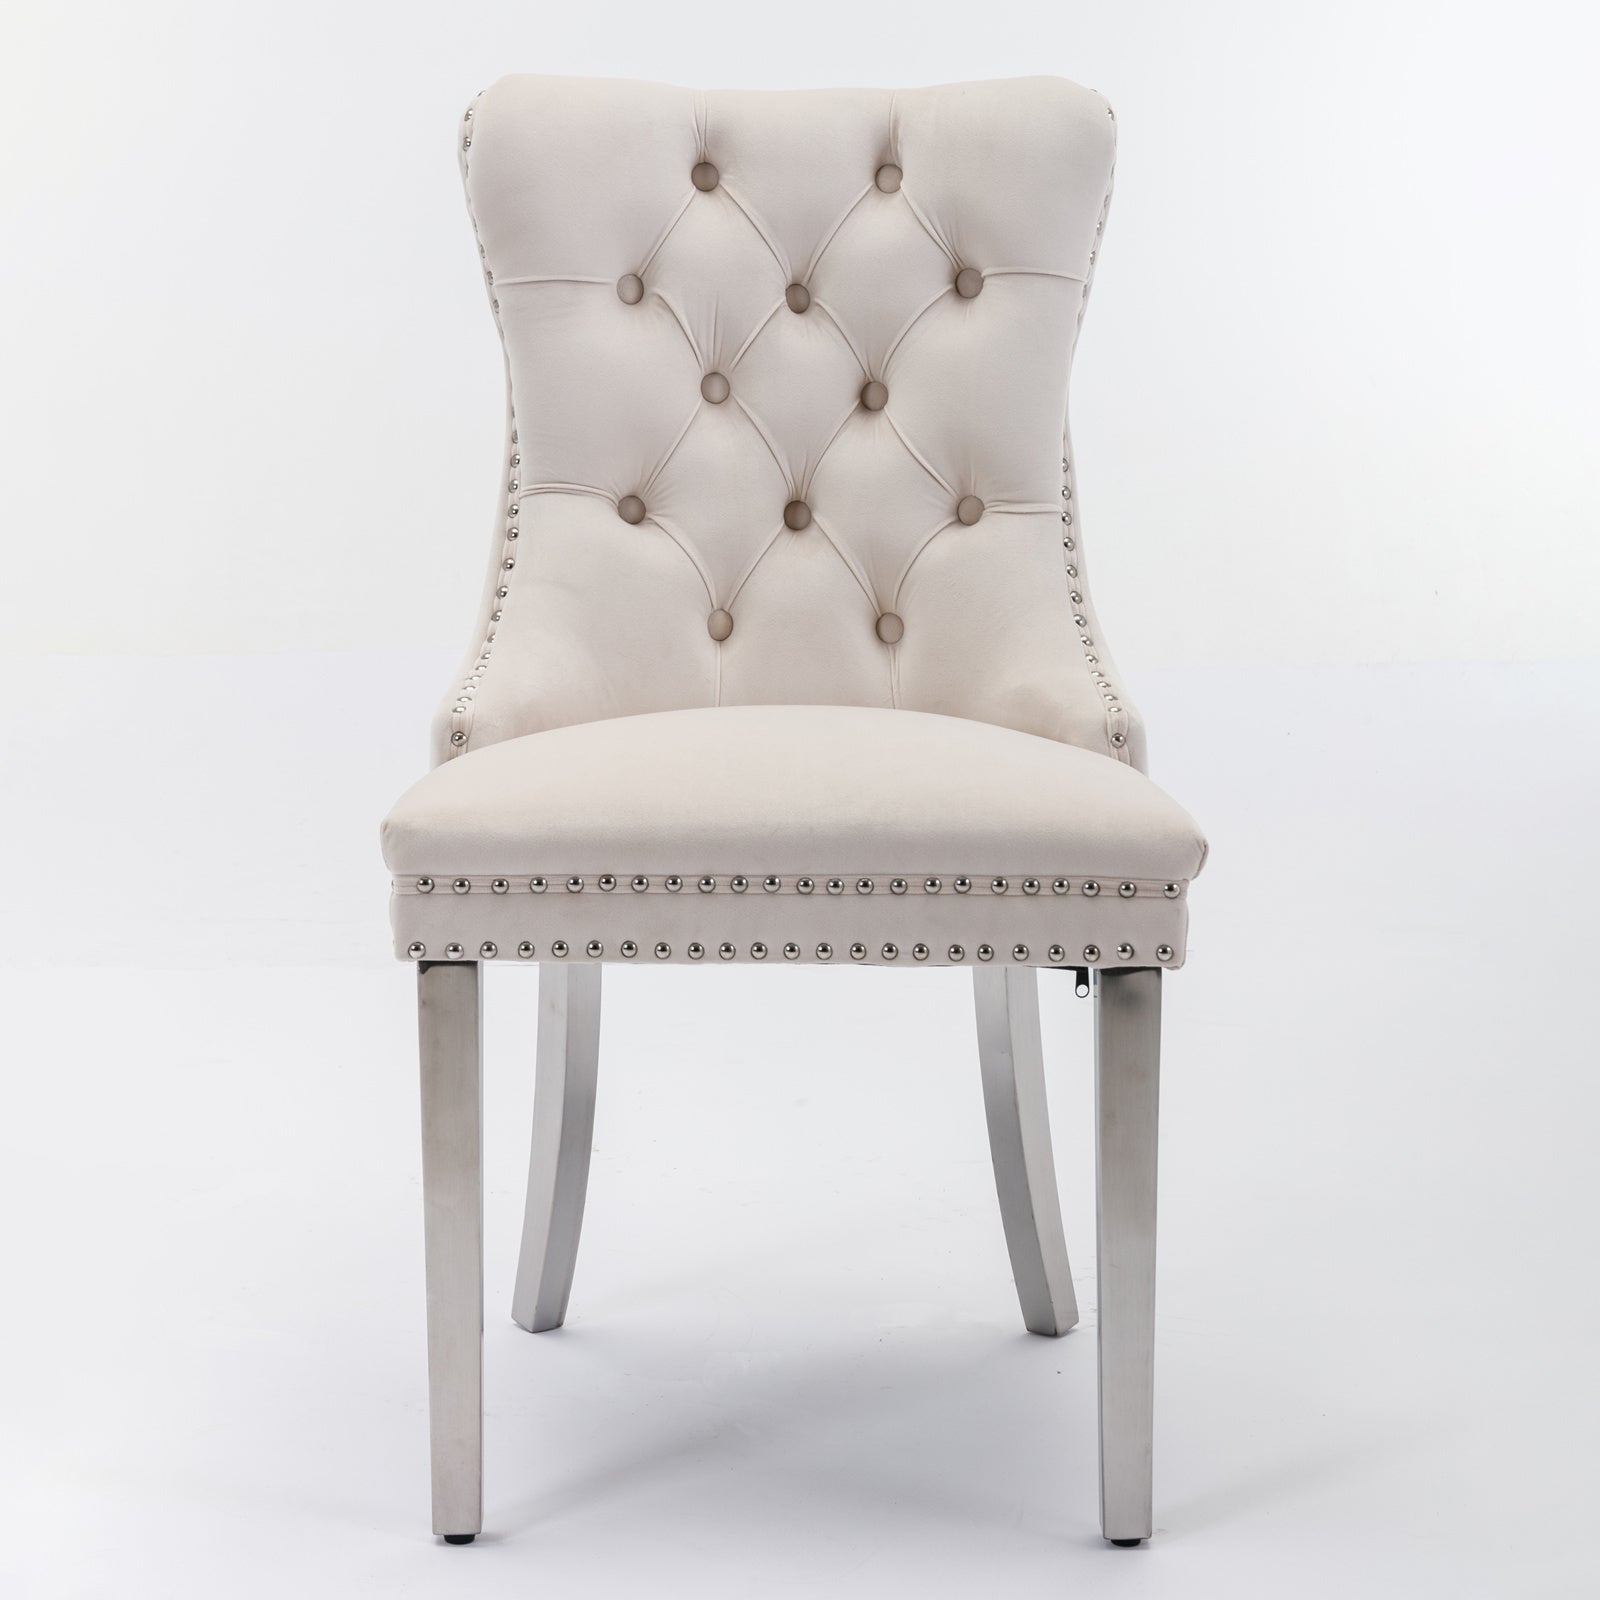 Chloe Set of 2 Beige Velvet Dining Chairs with Chrome Stainless Legs